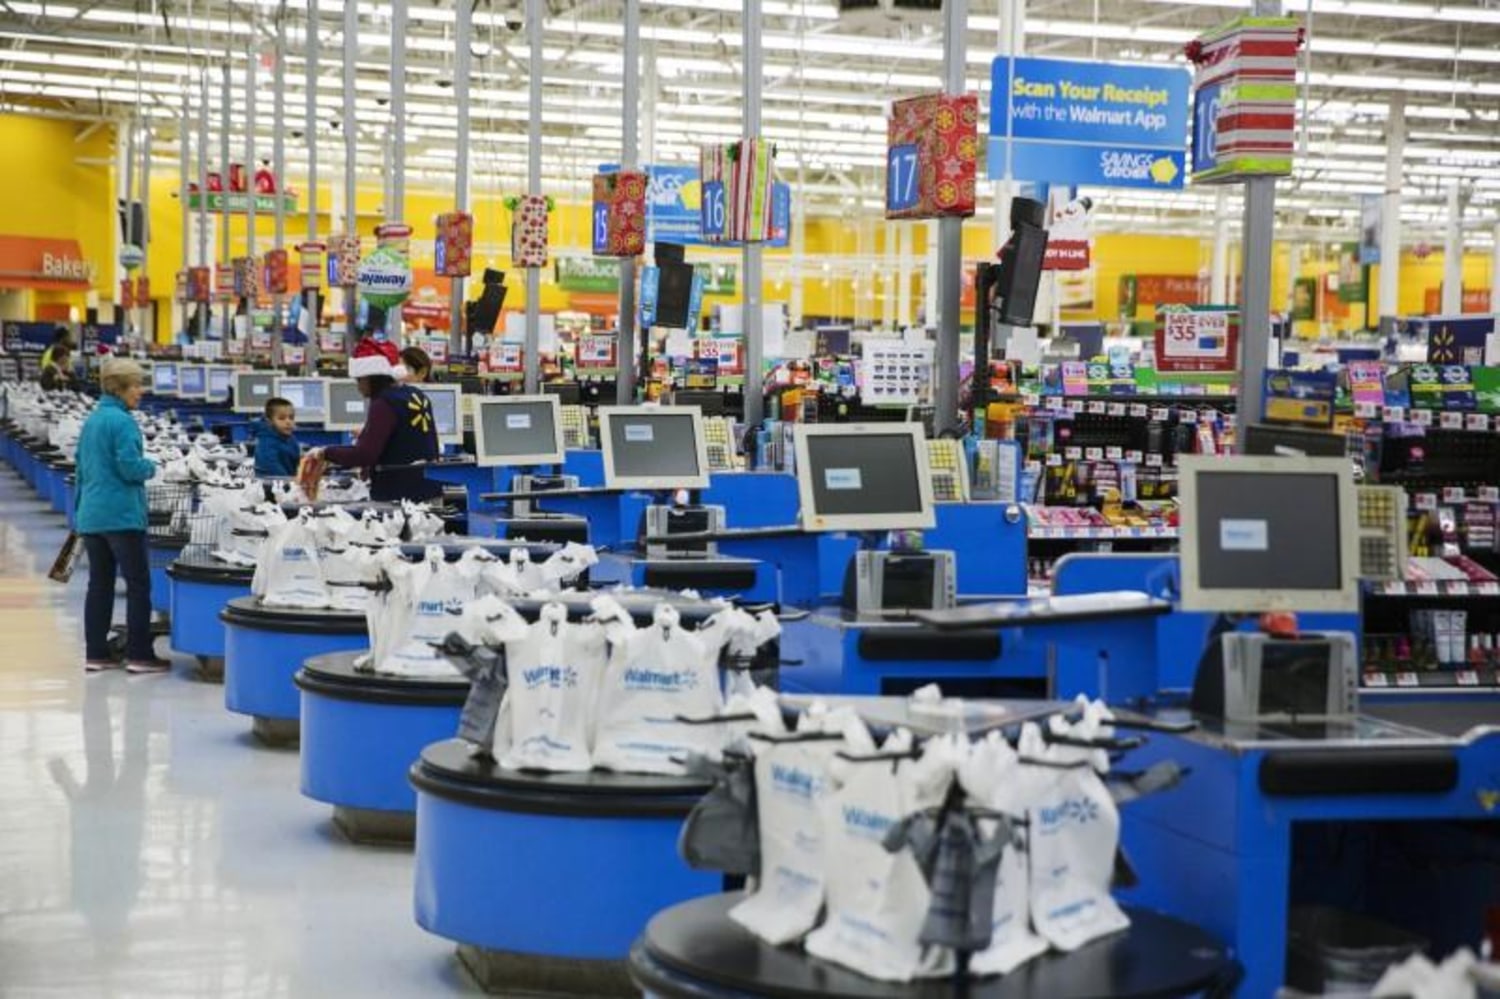 Walmart teams with Netlix for online shopping hub